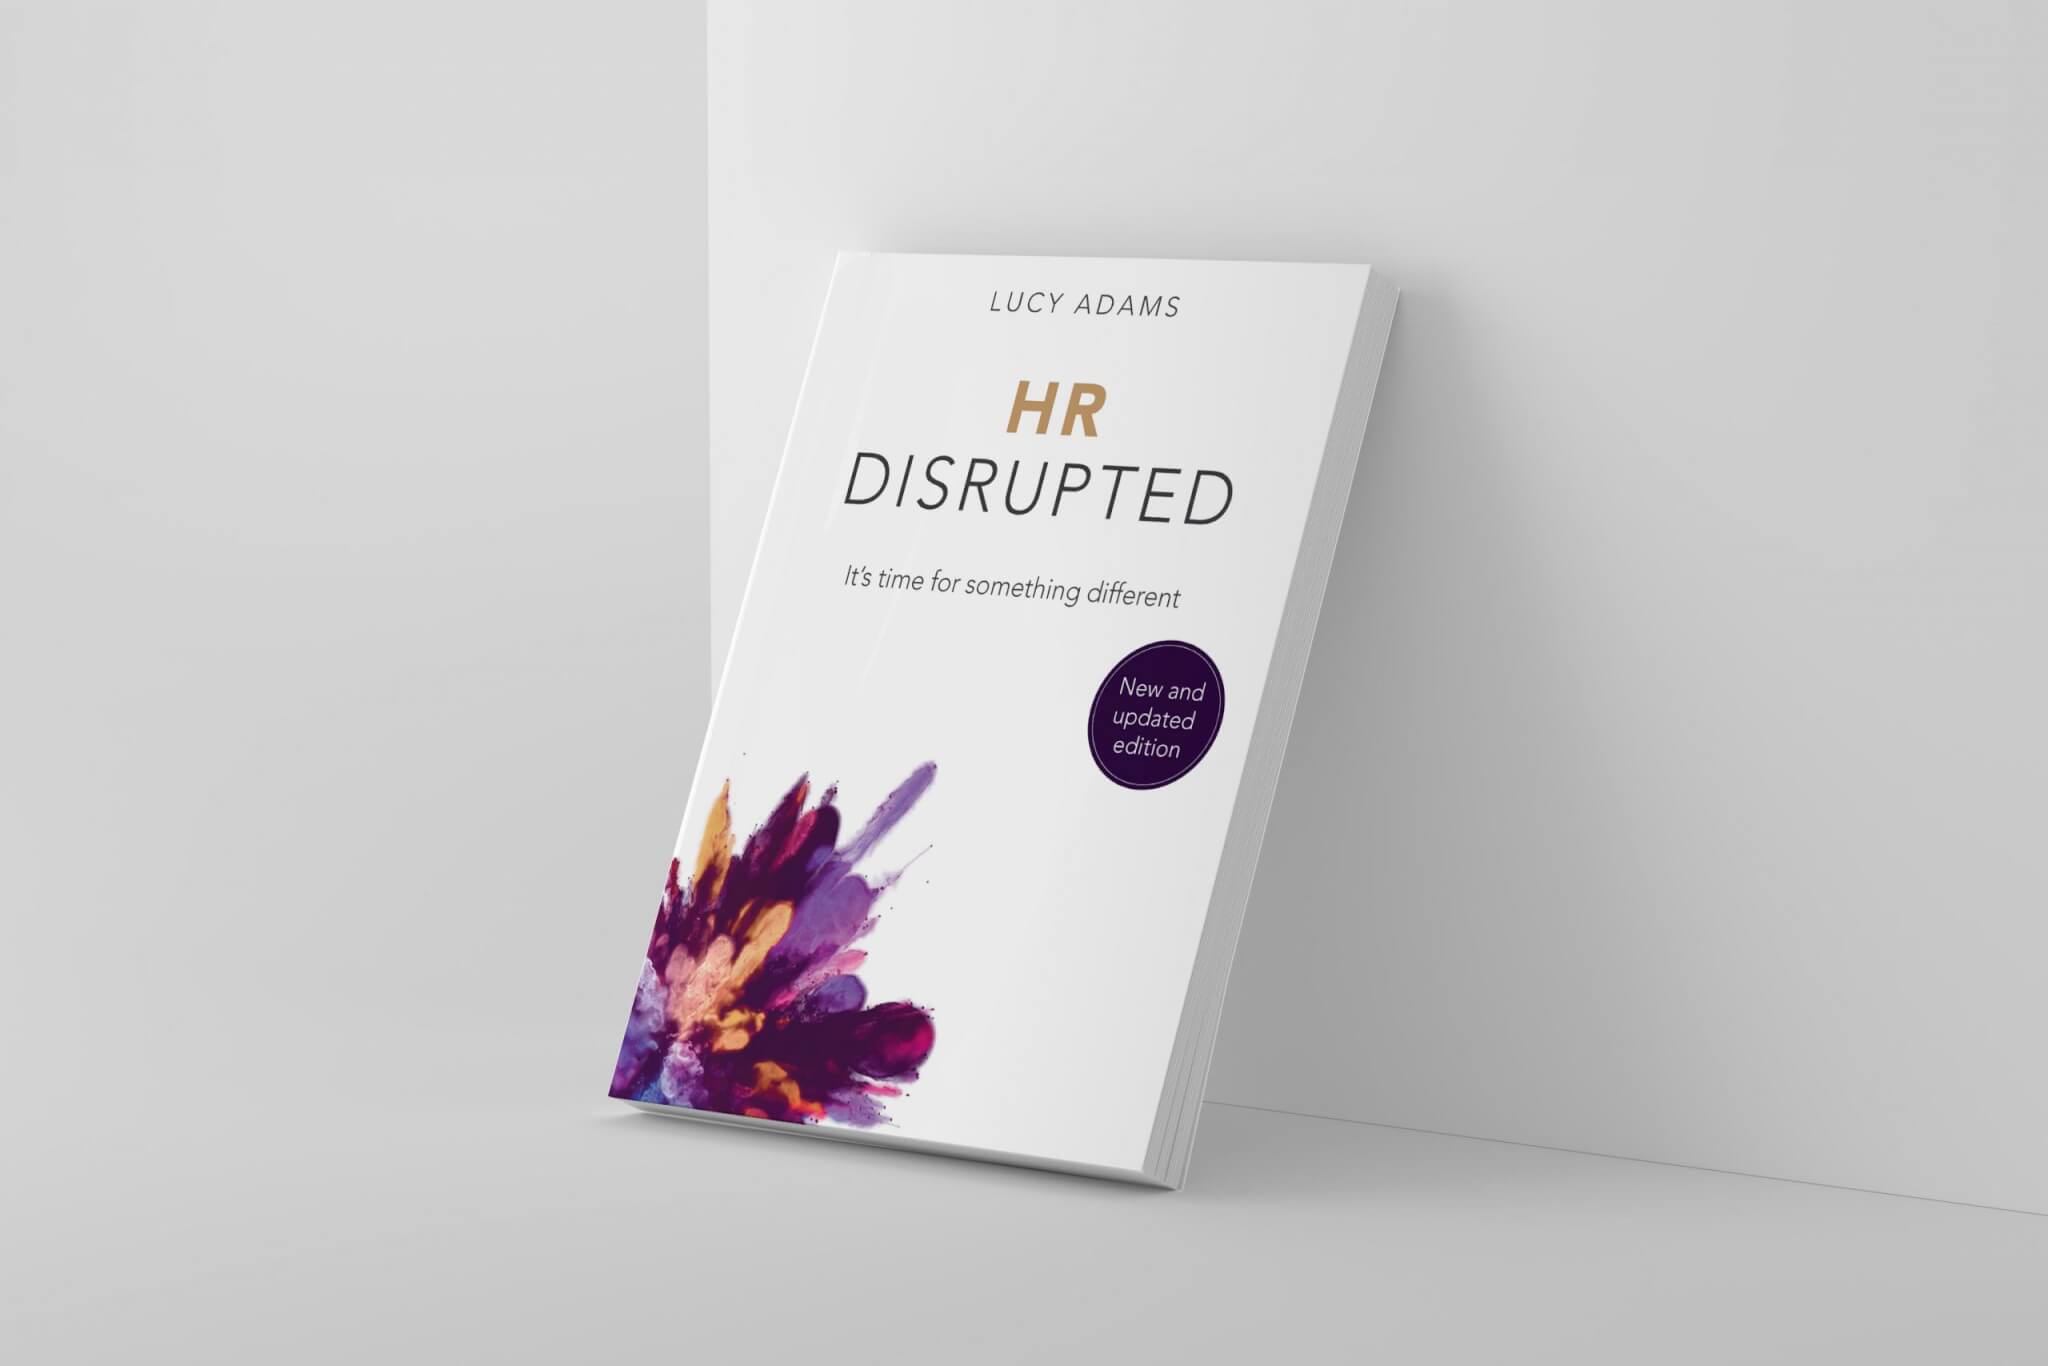 HR Disrupted Book